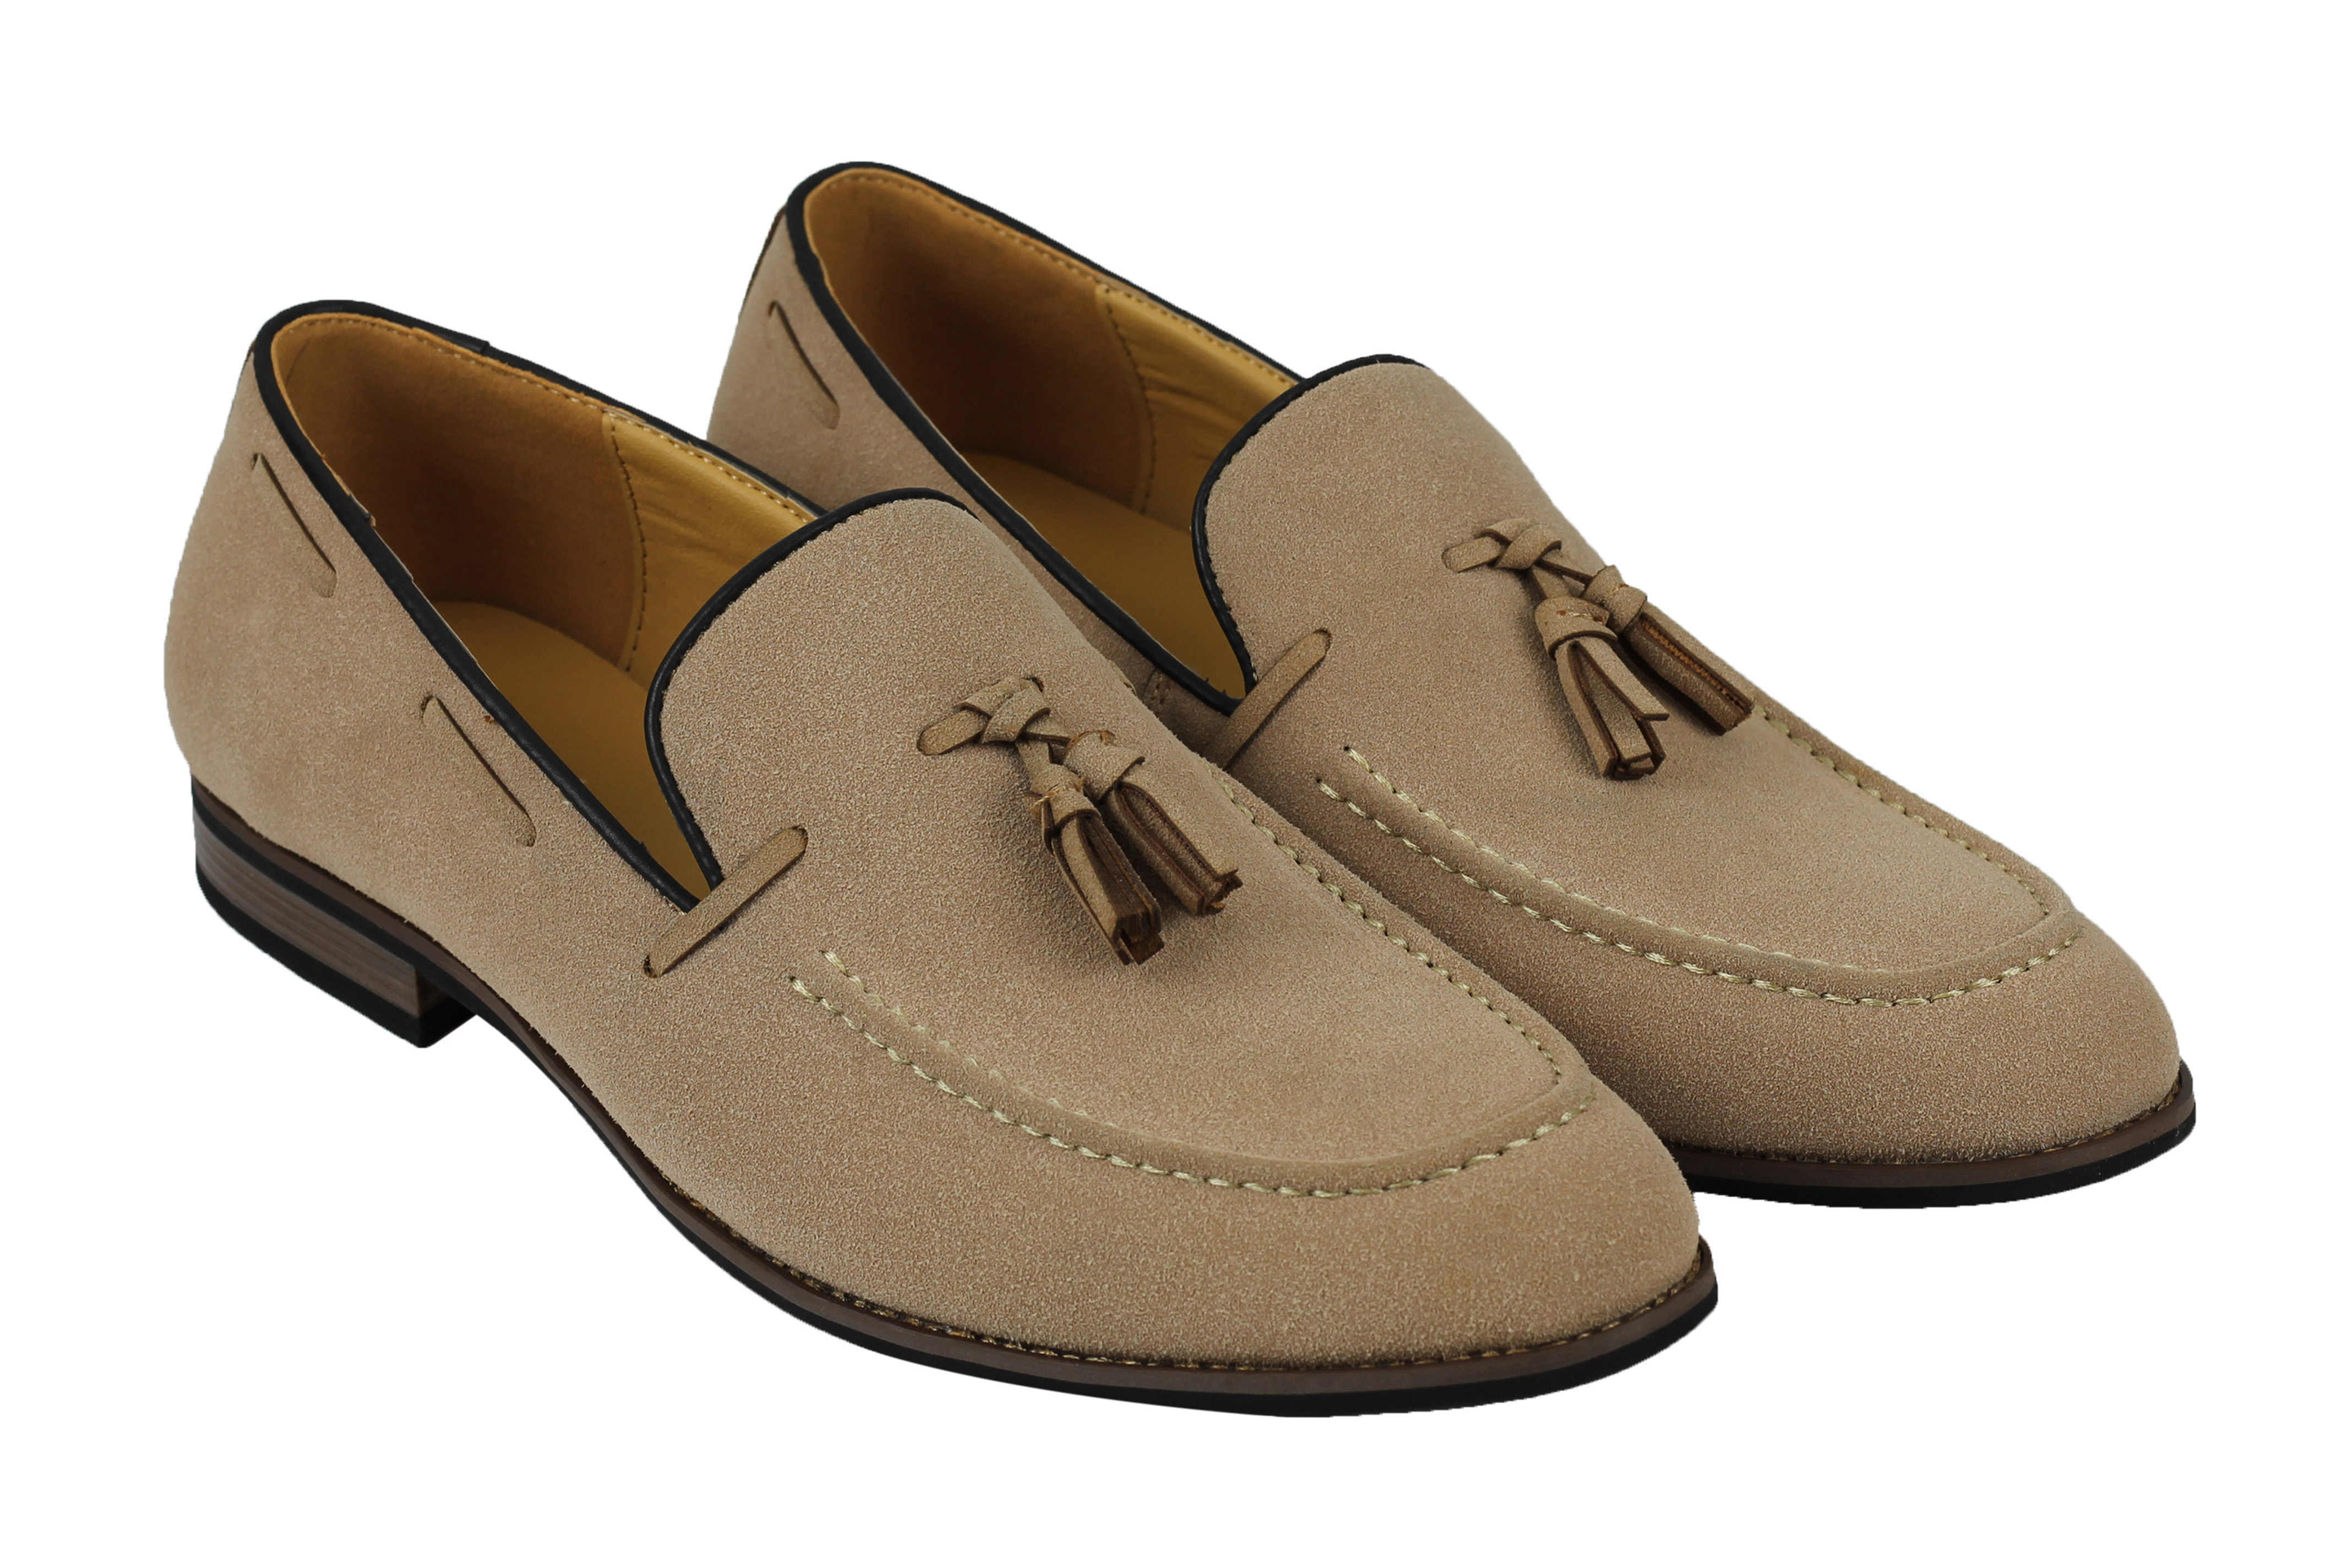 Men's Shoes Mens Suede Leather Line Tassel Loafers Vintage Smart Retro